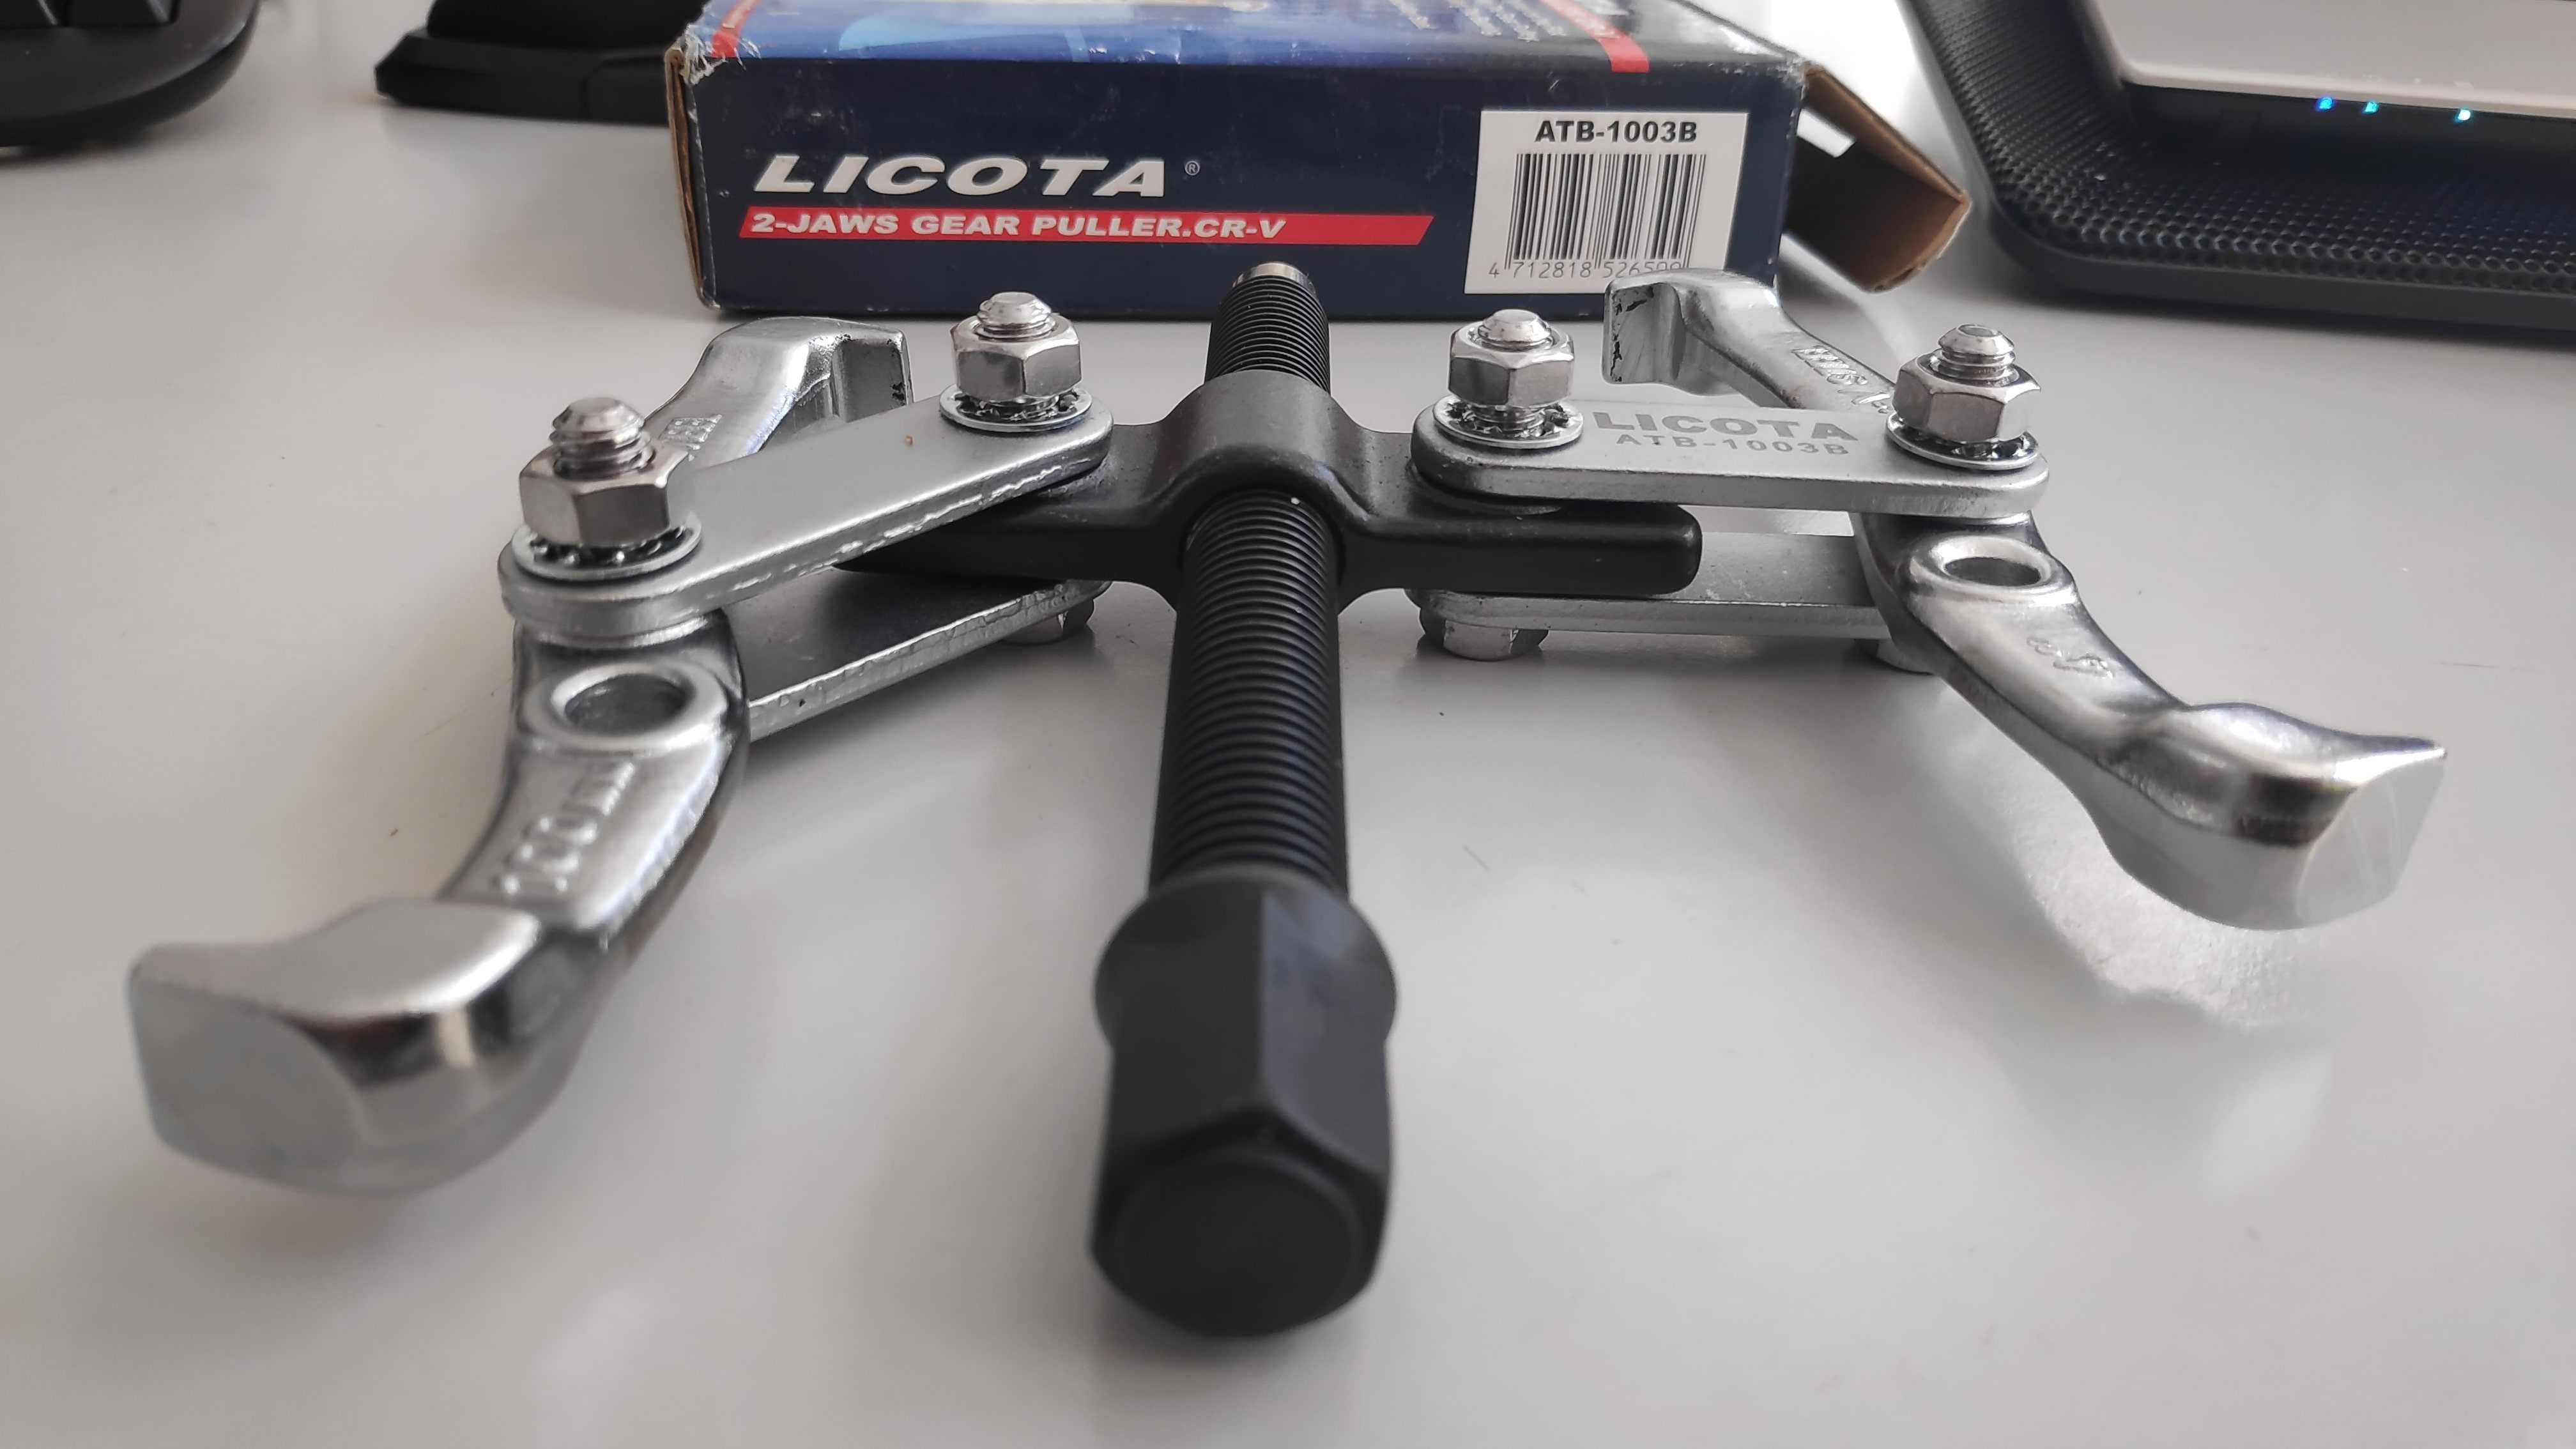 LICOTA ATB-1003B Engrenagem 6 "2-jaw Gear Puller